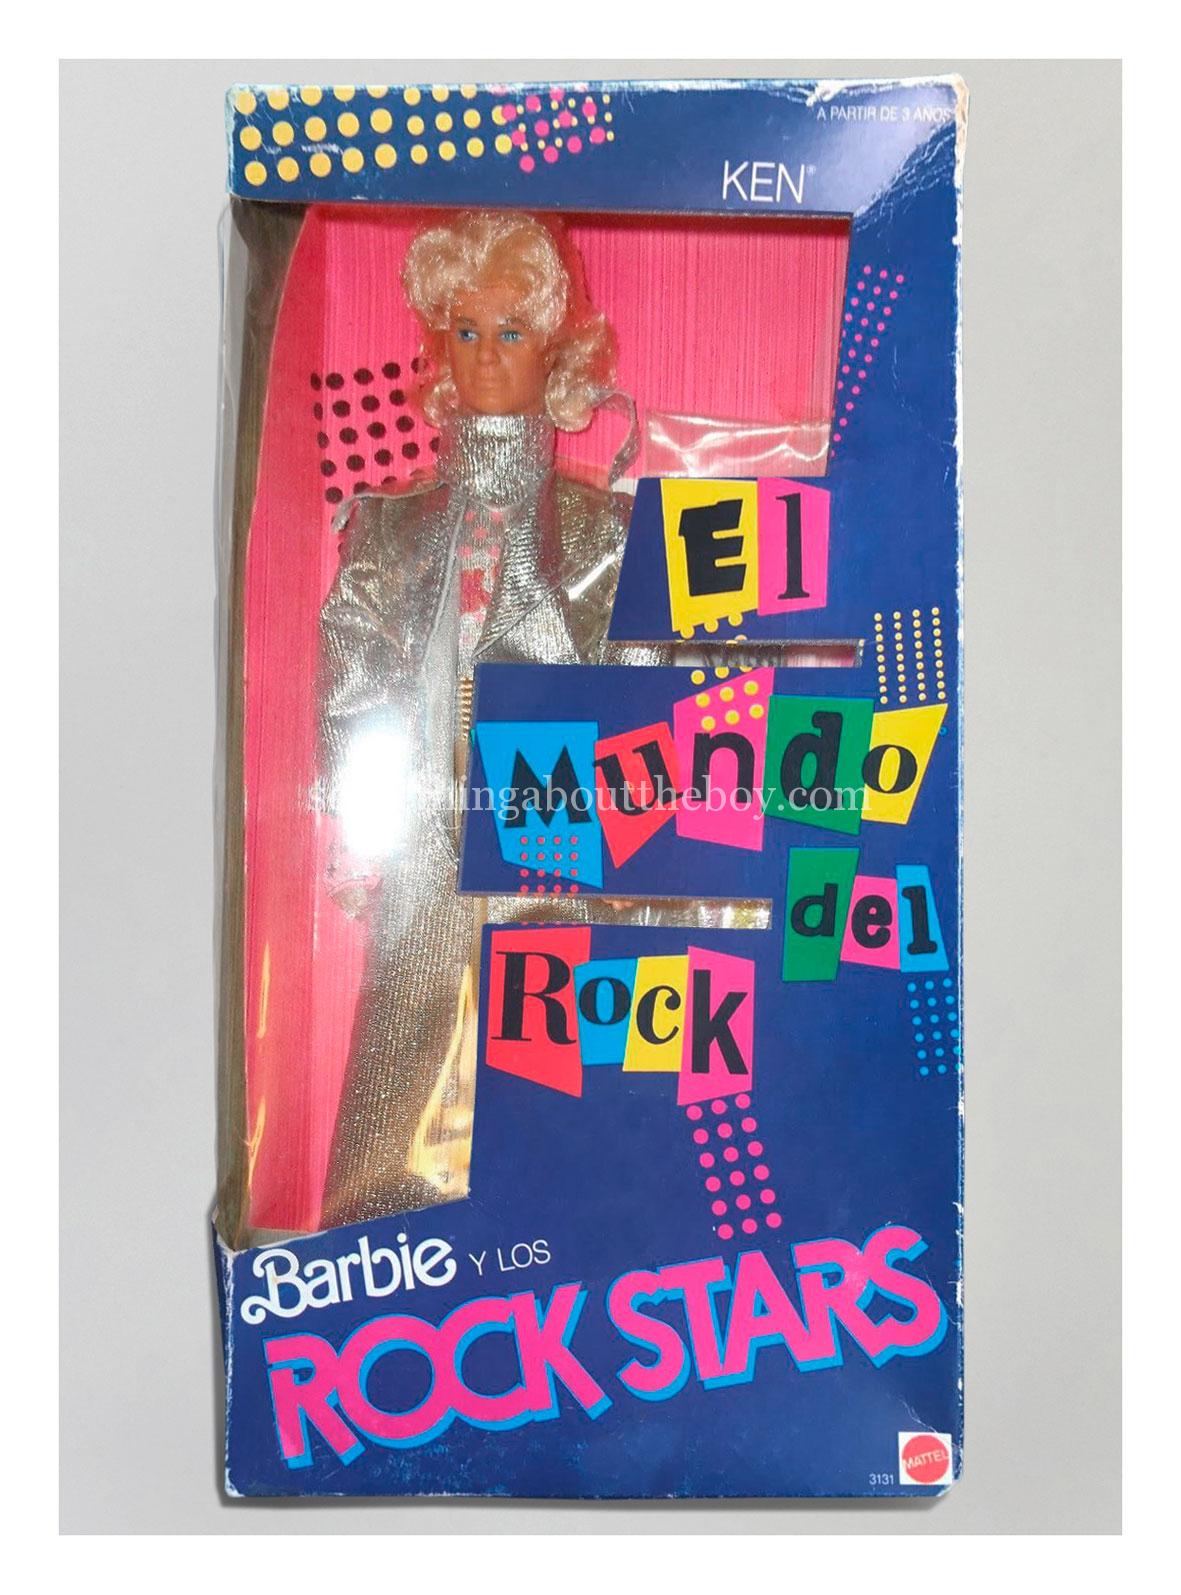 1987 #3131 Ken (Spanish version) in original packaging